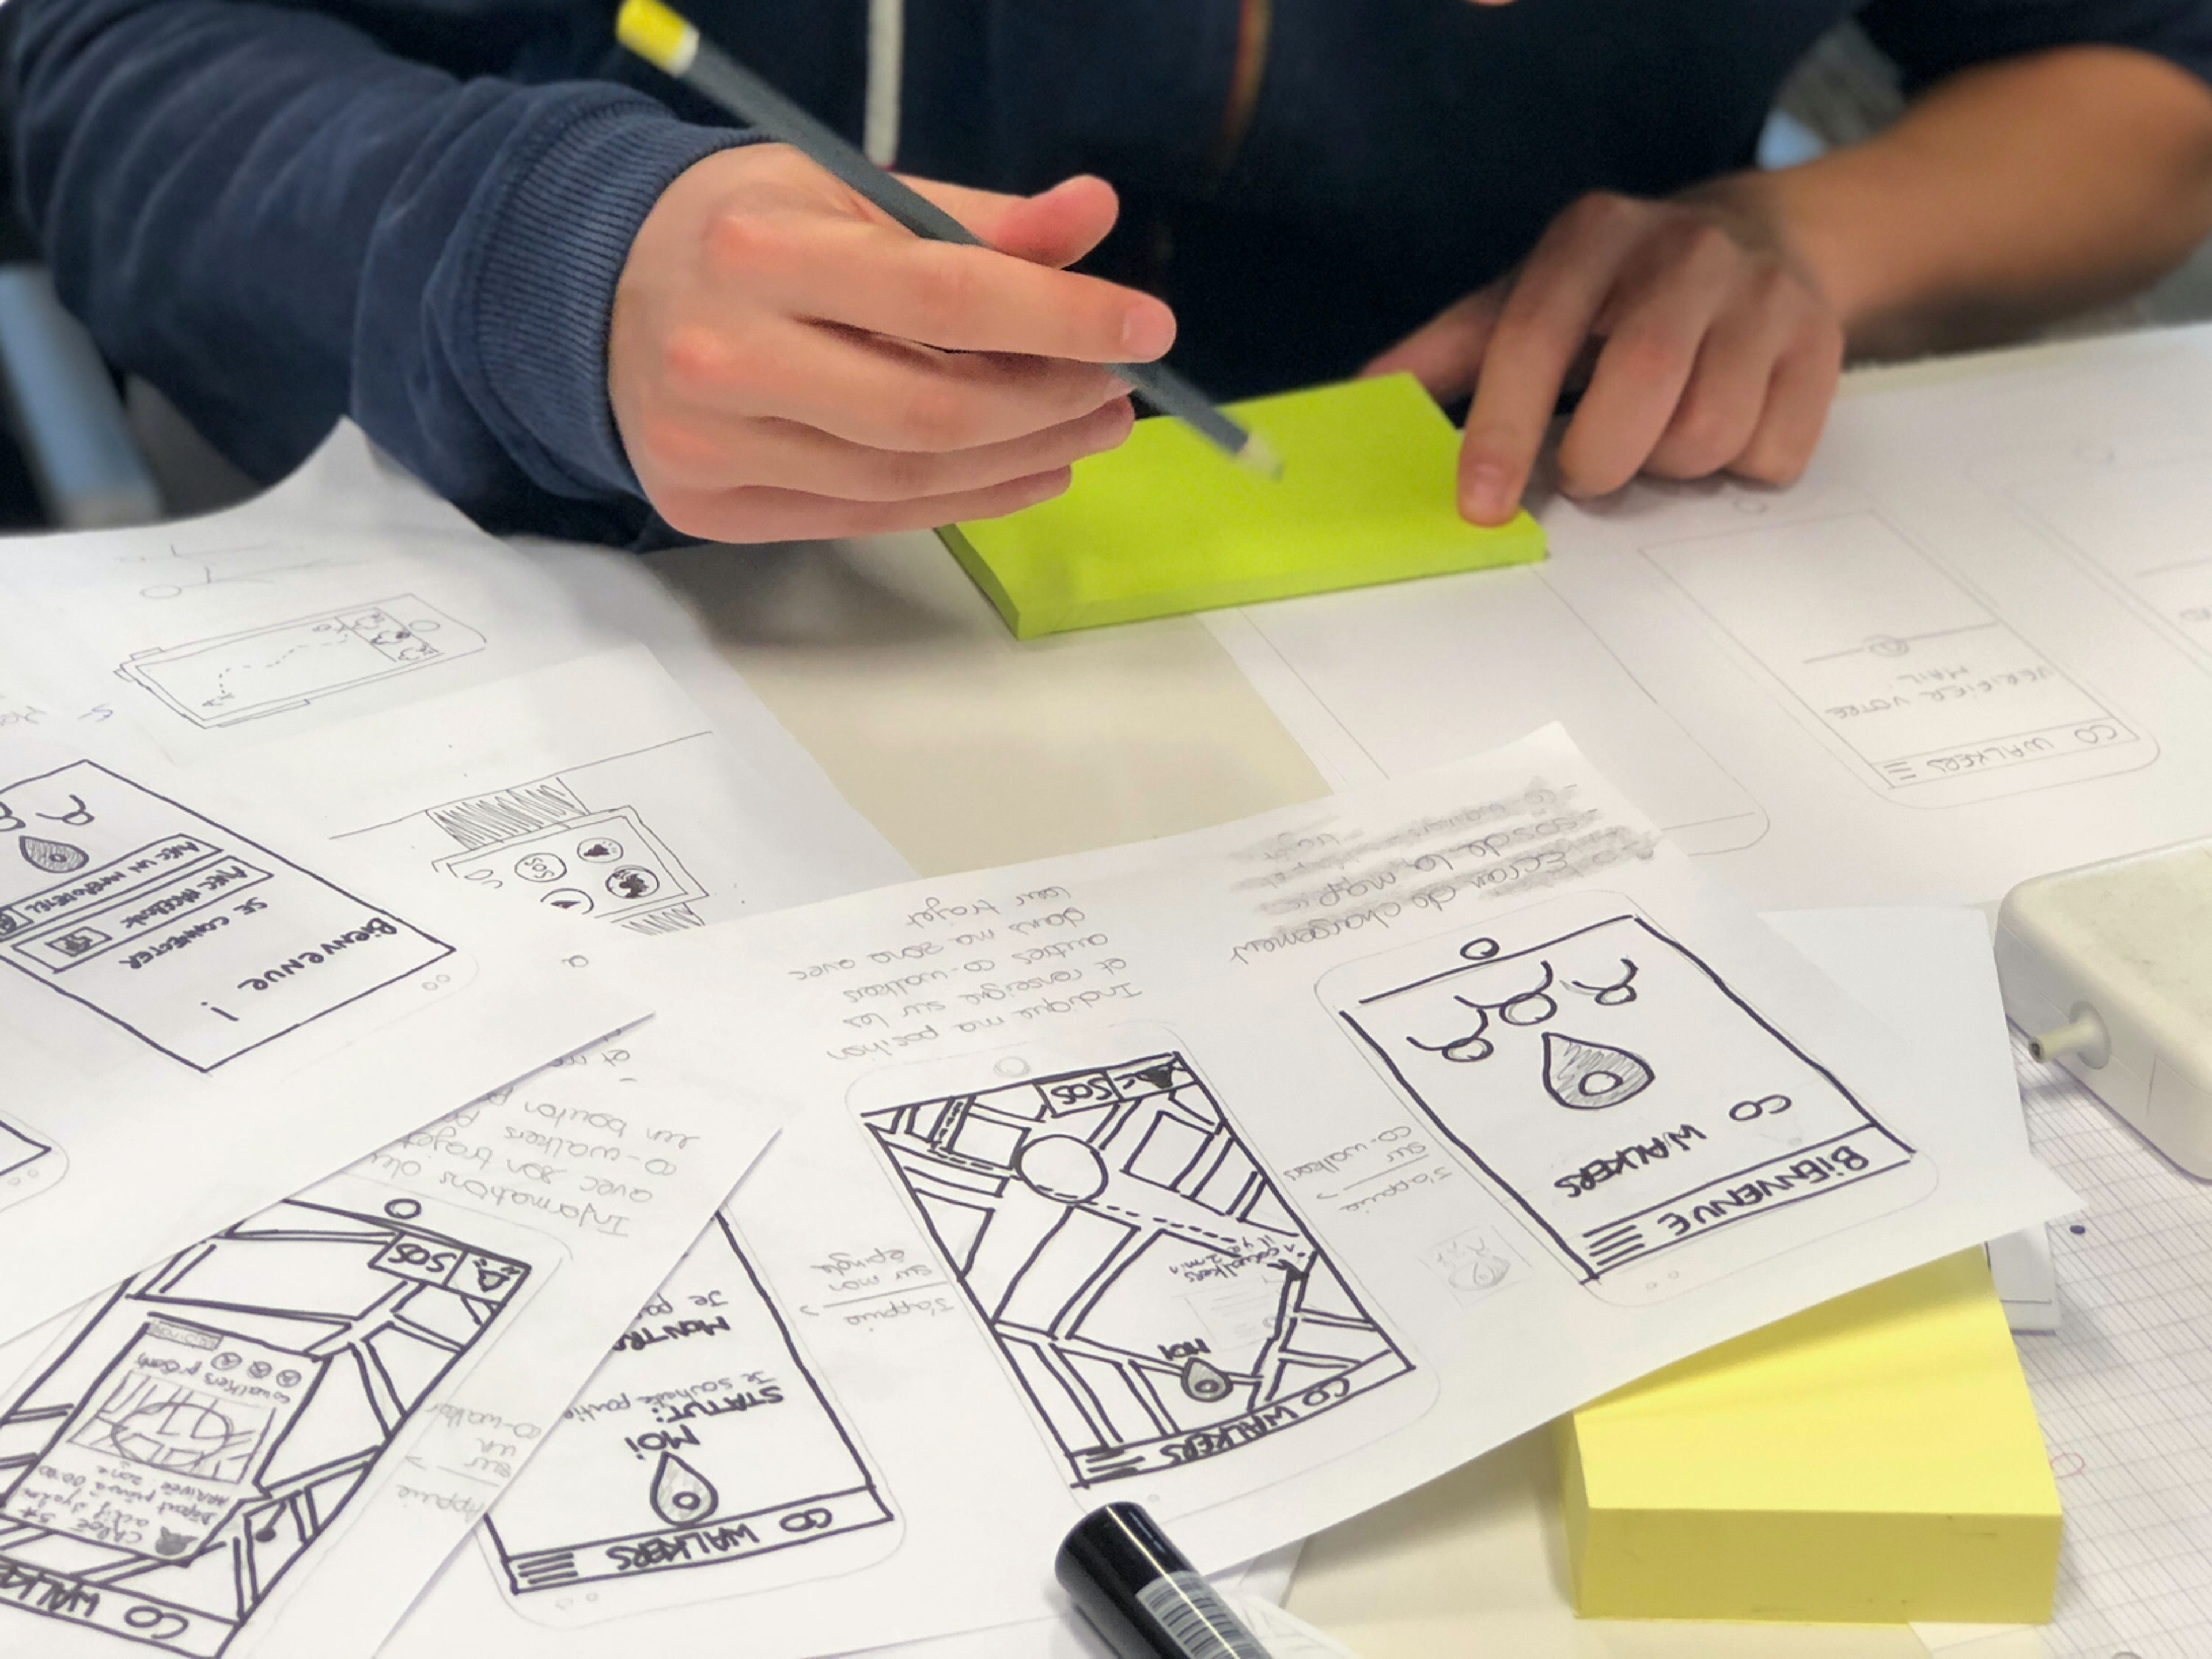 A designer creating paper prototypes